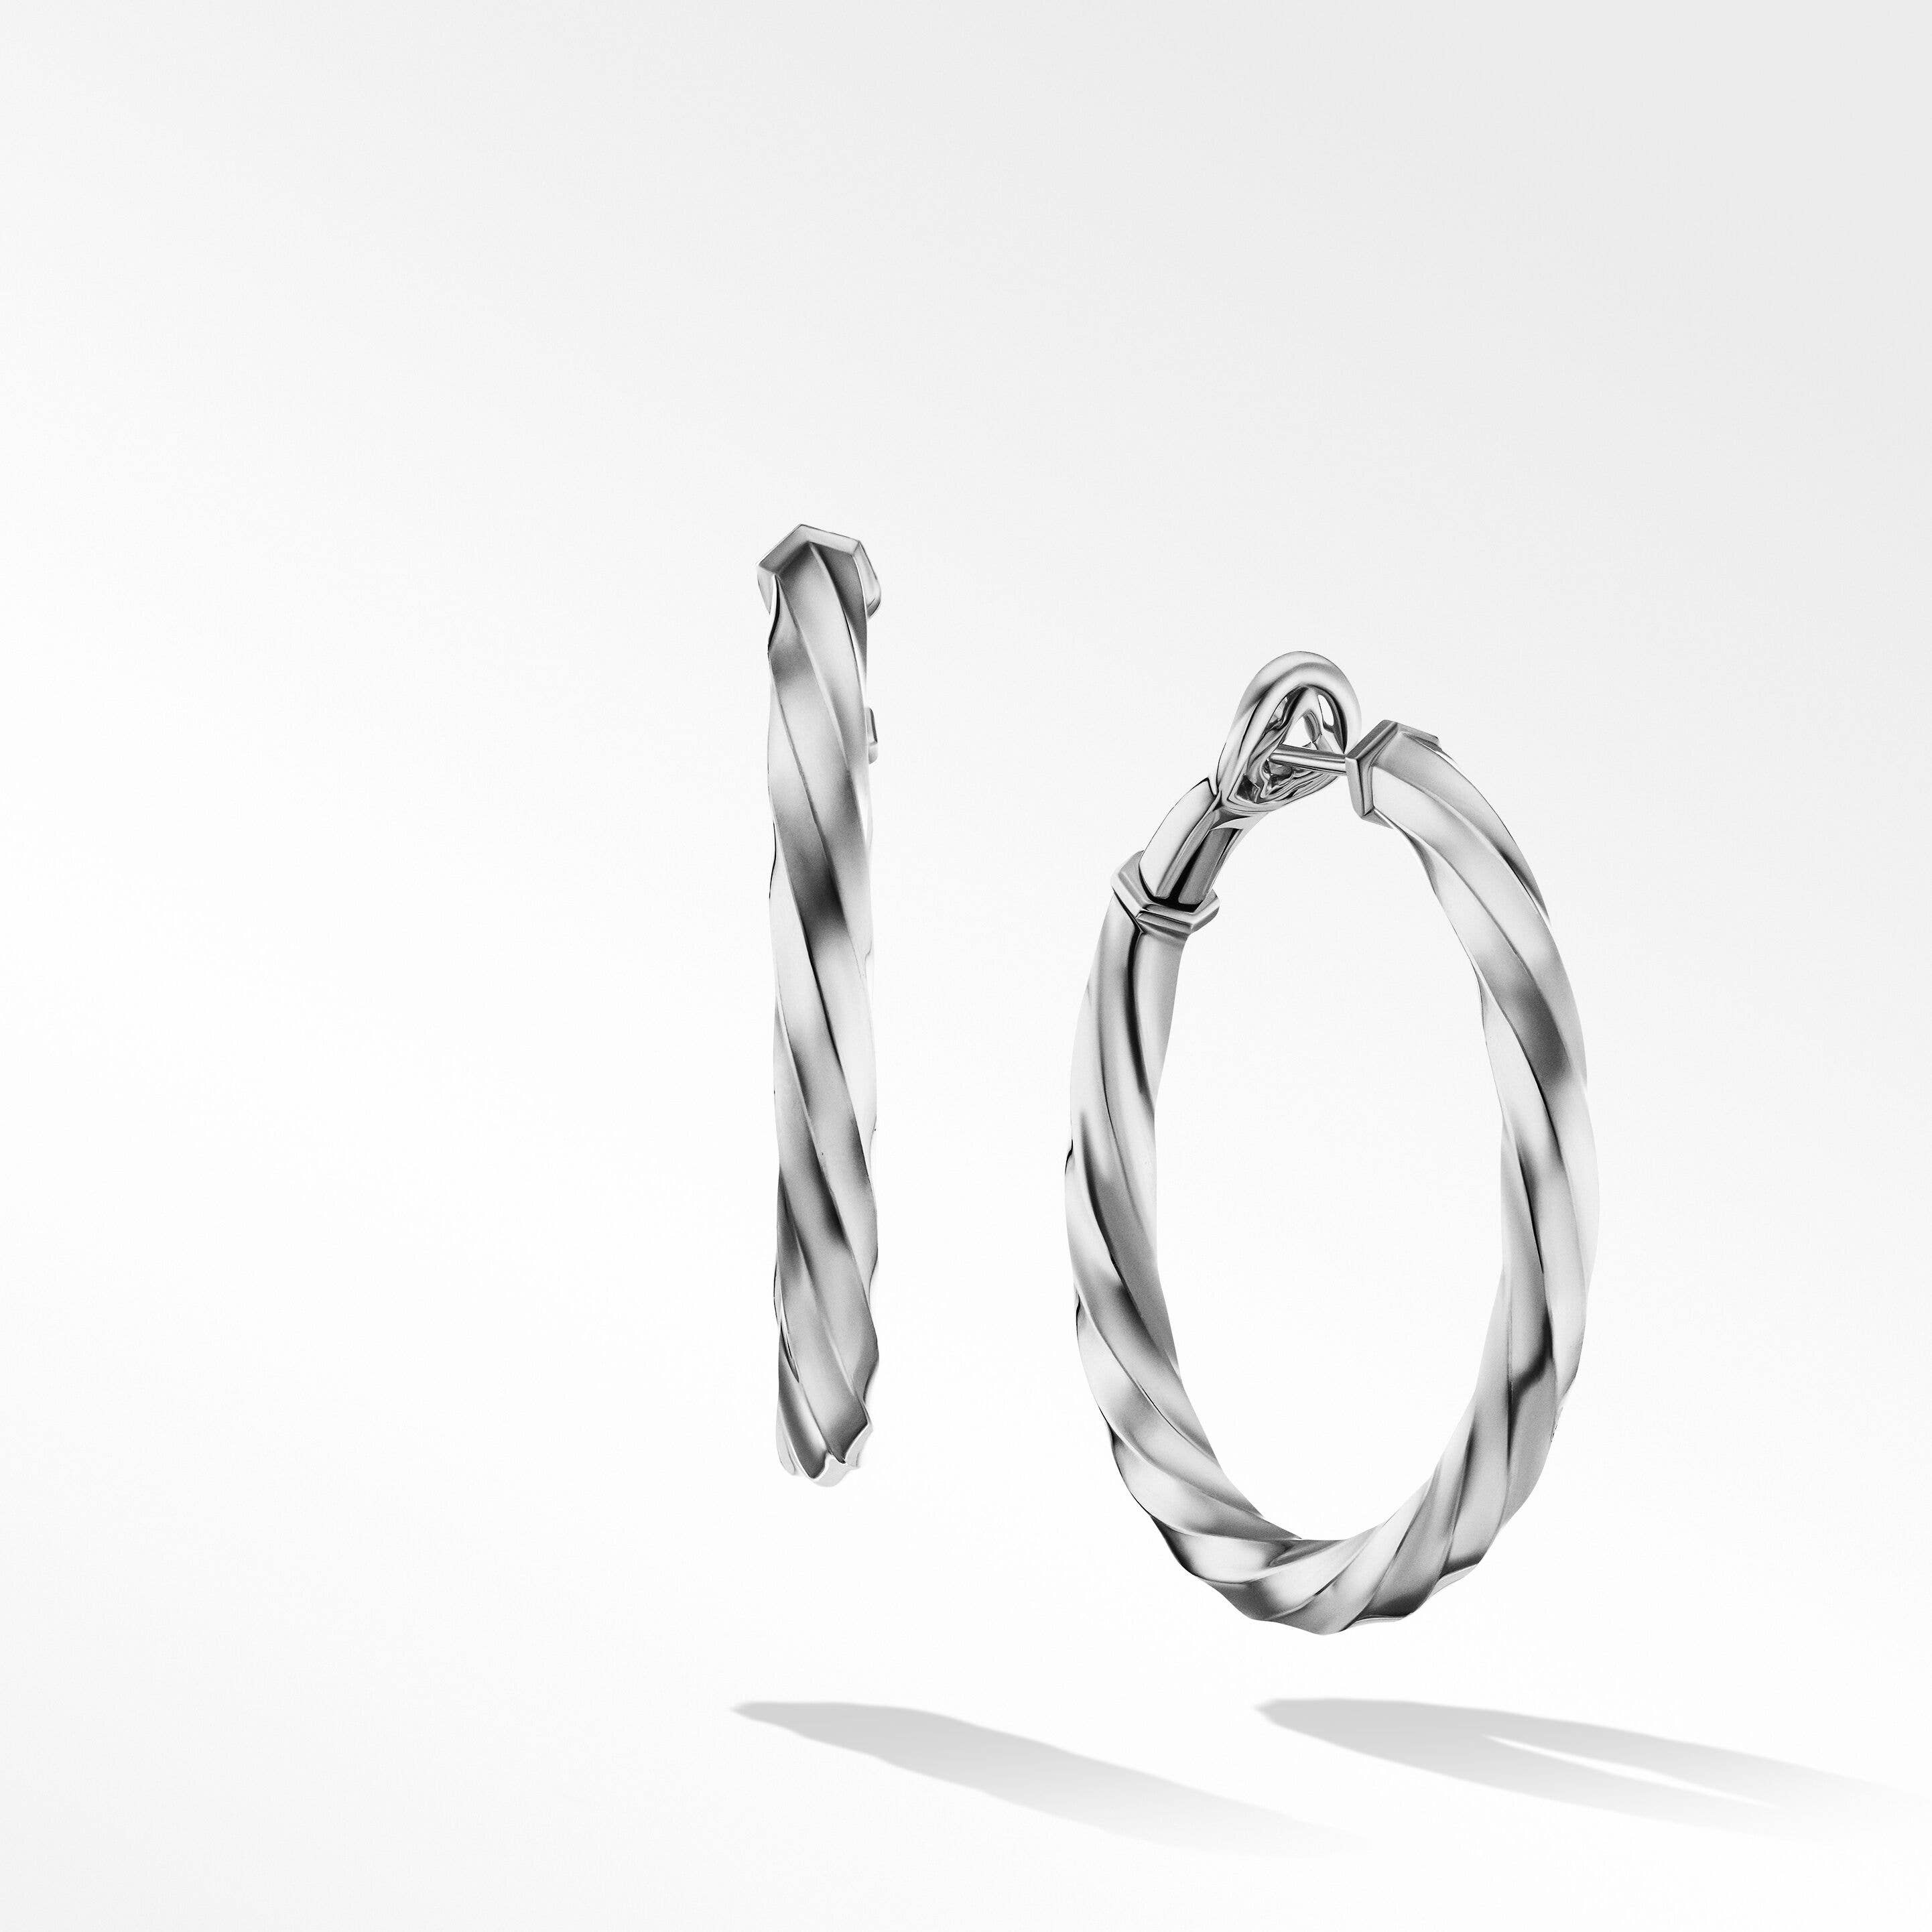 Cable Edge® Hoop Earrings in Recycled Sterling Silver